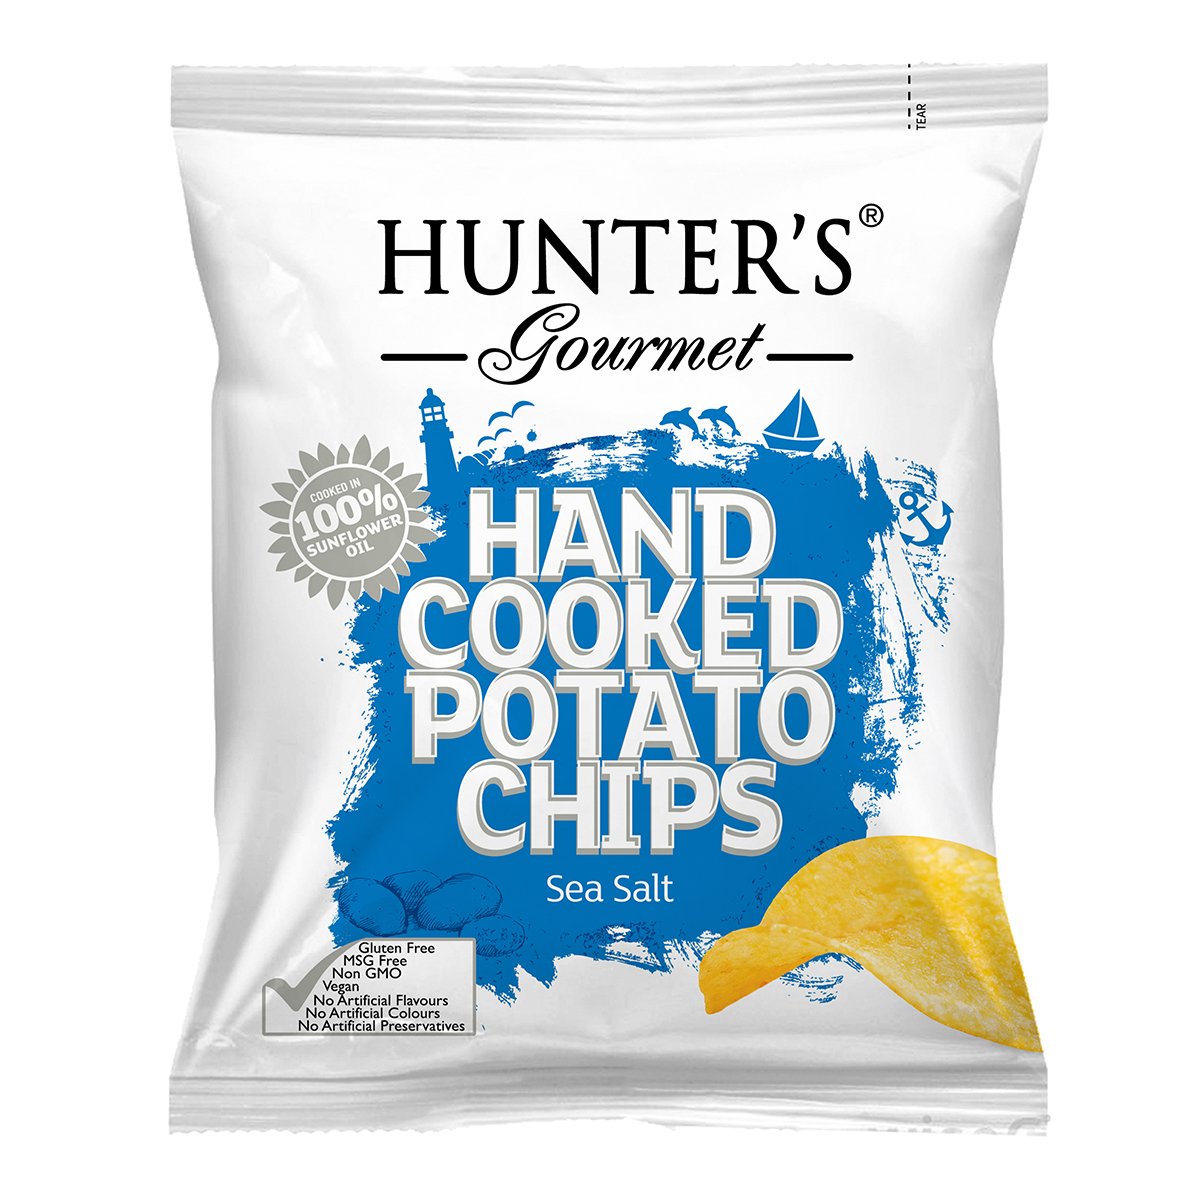 HUNTER'S GOURMET Hand Cooked Potato Chips - Sea Salt, 40g